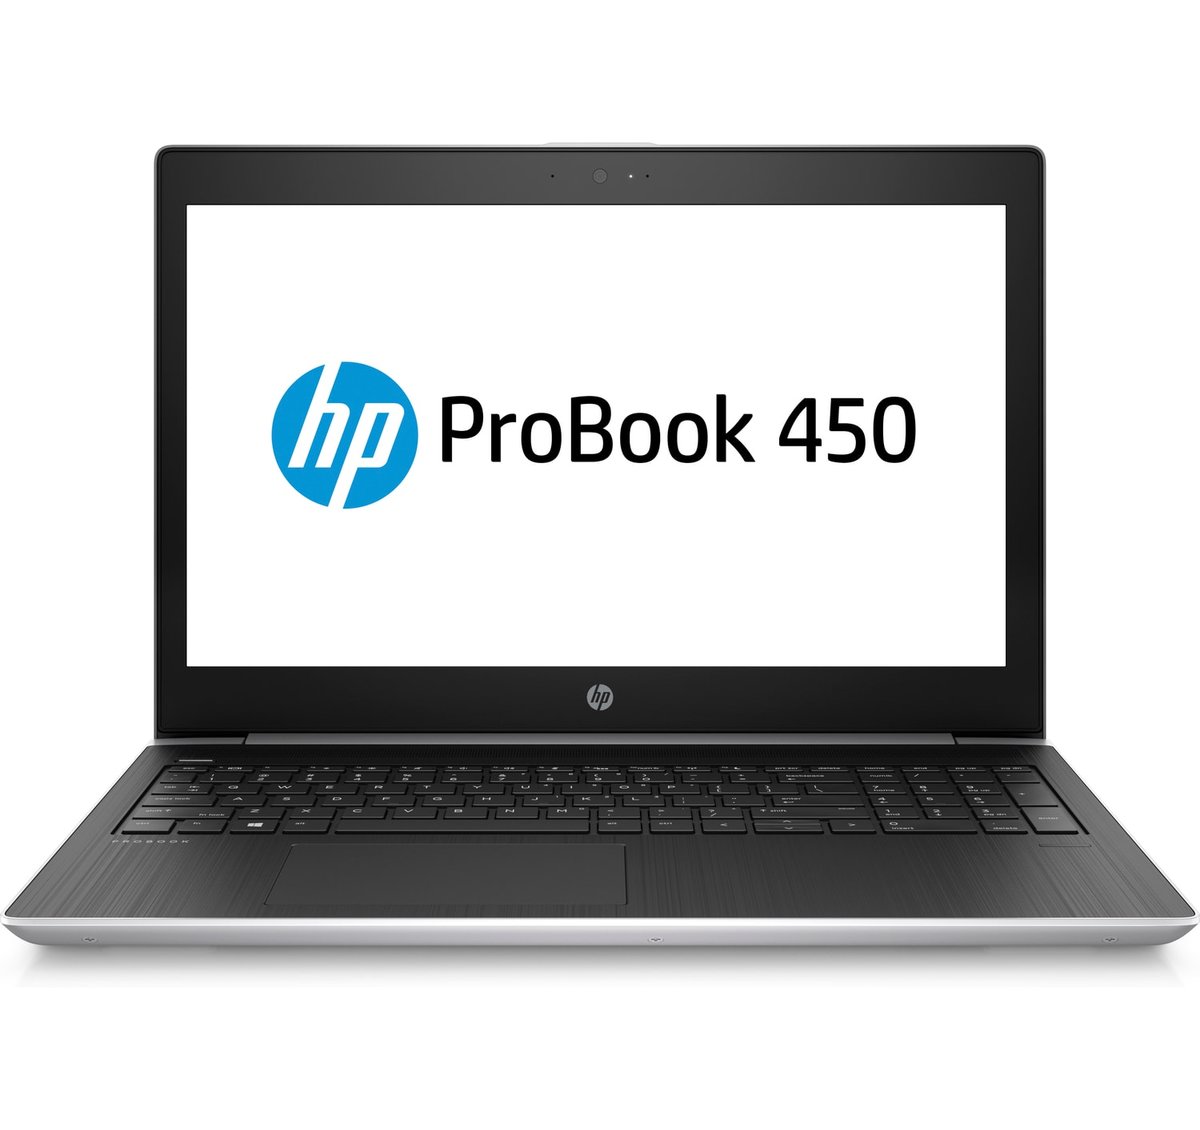 HP ProBook 450 G5 Intel Core i5-8250U, Memory 4GB, Storage 500GB, Display 15.6